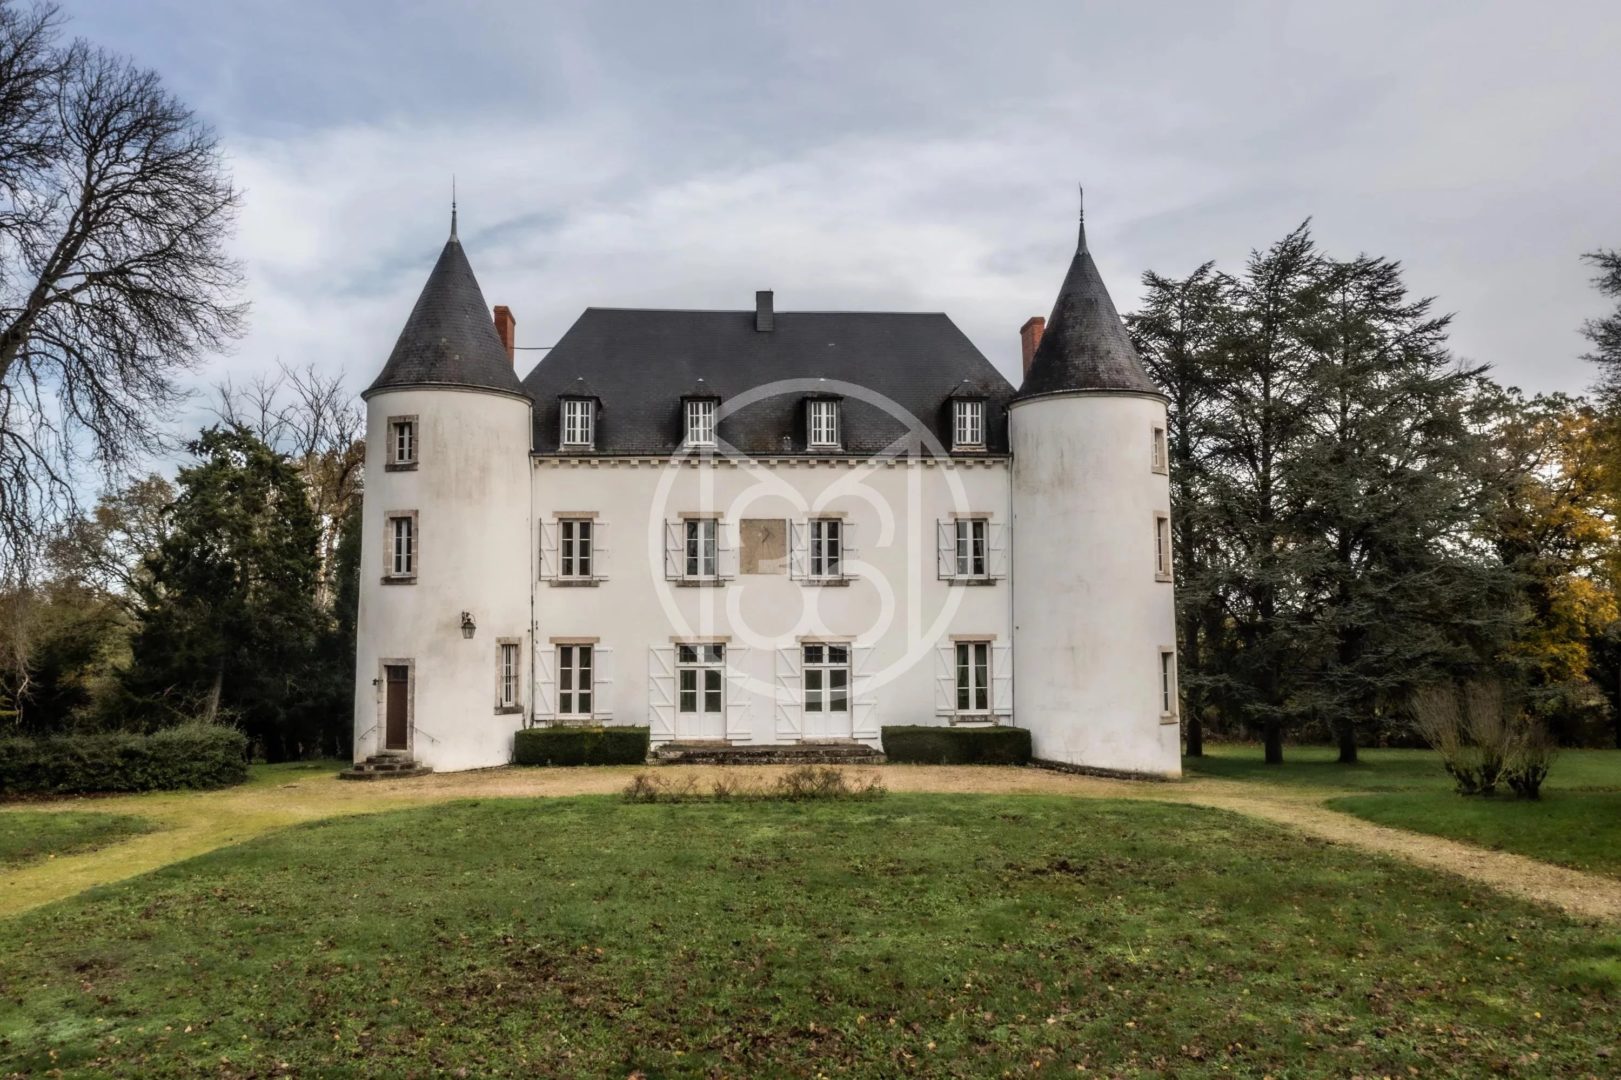 Chateauroux, 16th century castle, 400m² on 3ha park – river – Two houses – outbuildings - 20263cl